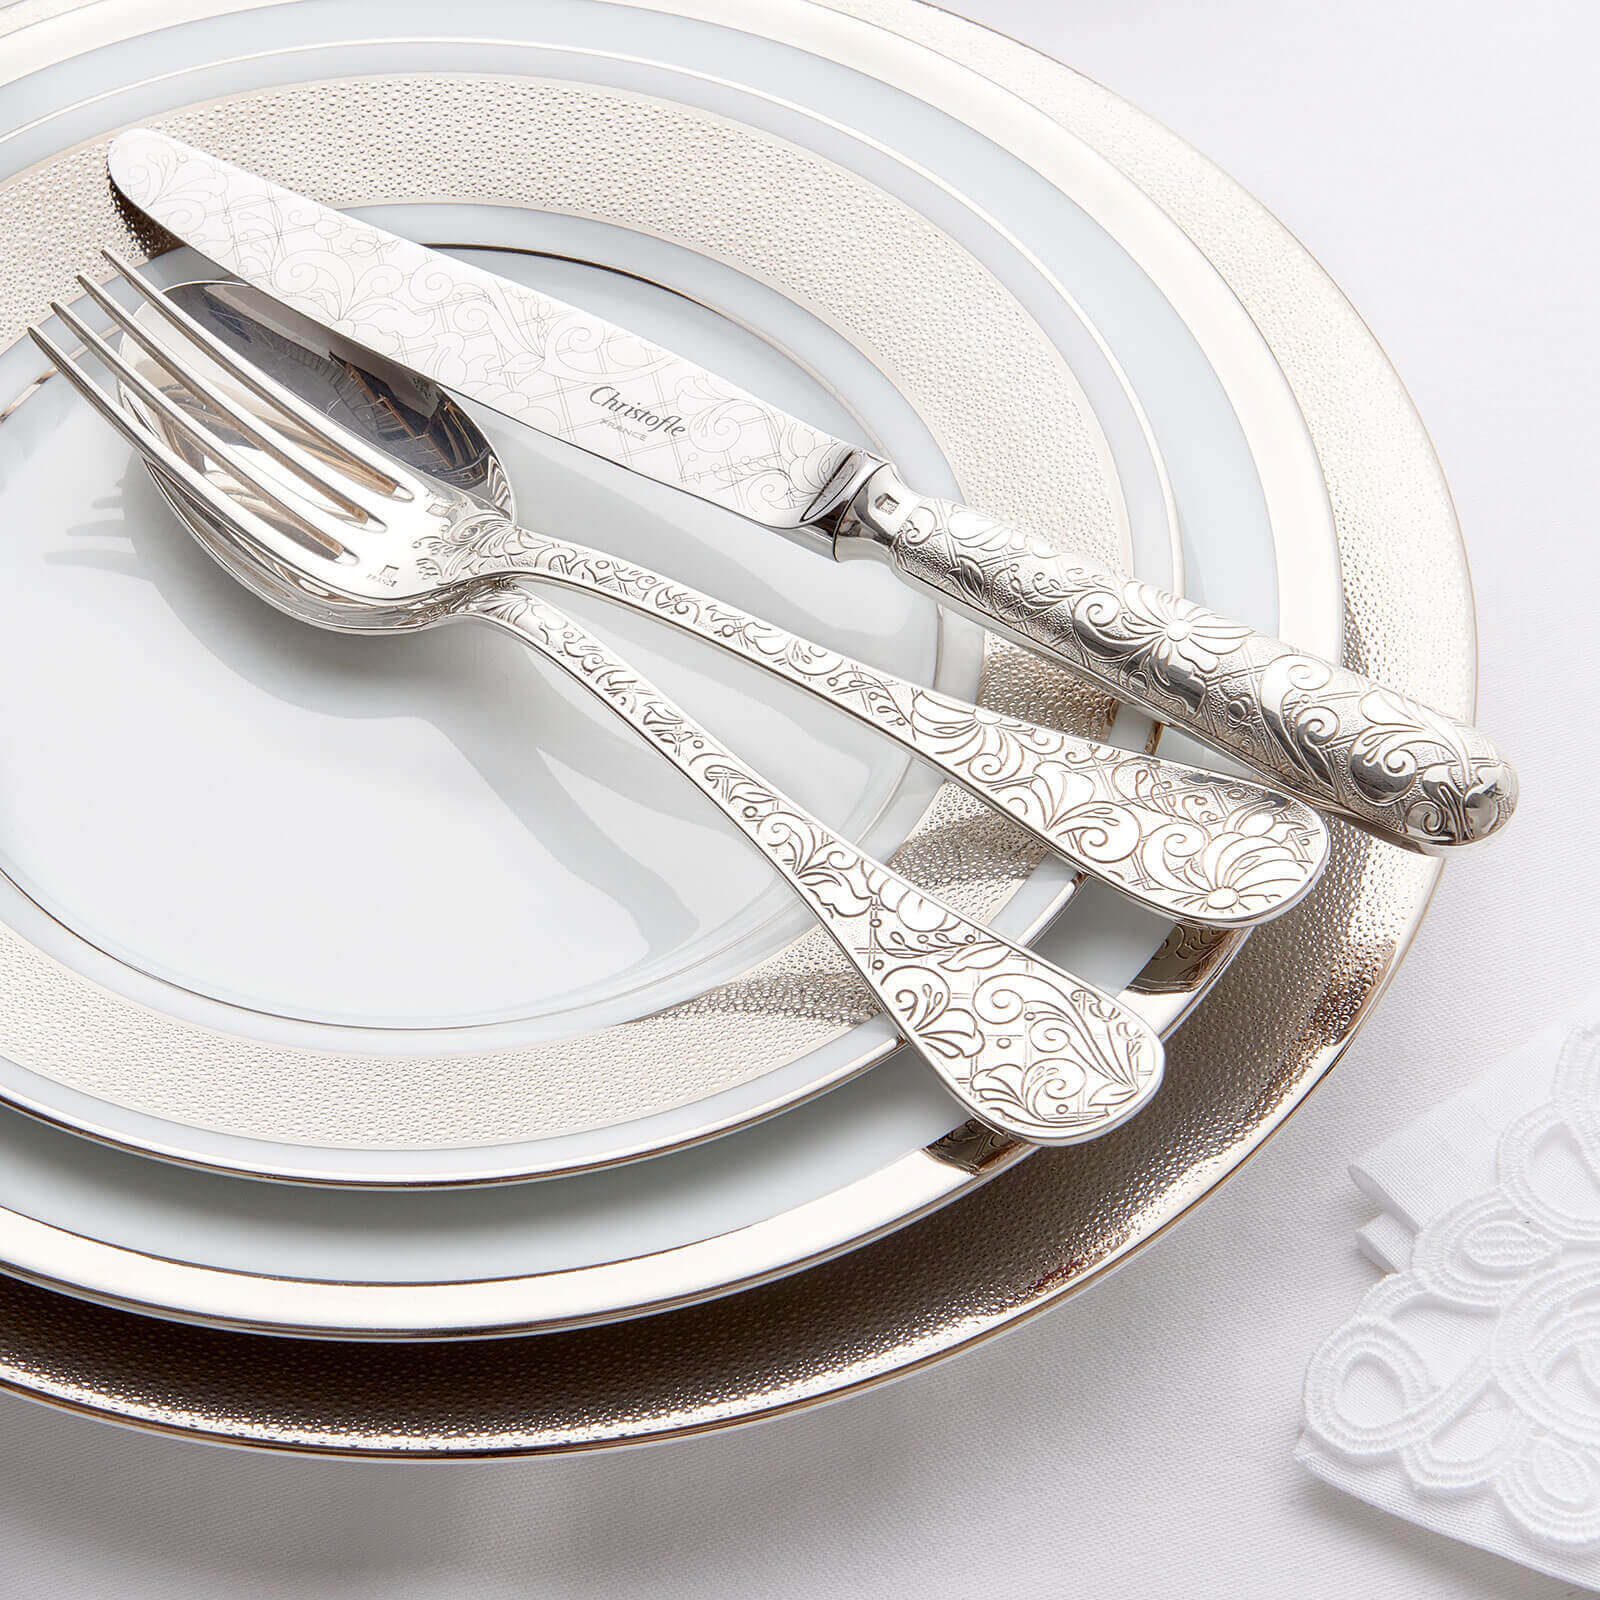 Christofle Malmaison Cutlery | 4 Piece Silver Plated Cutlery Set